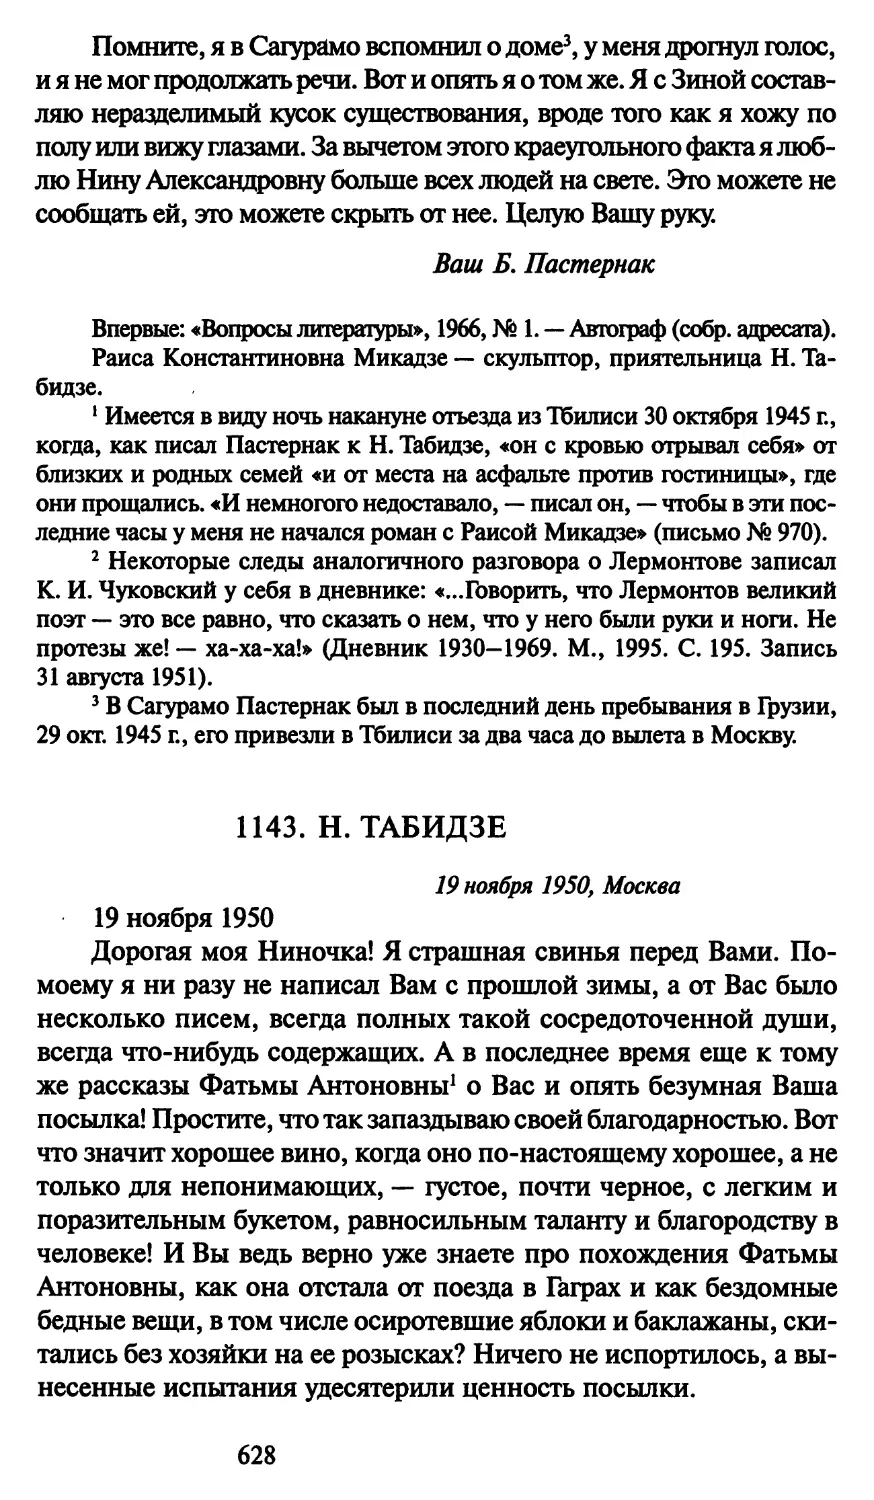 1143. Н. Табидзе 19 ноября 1950